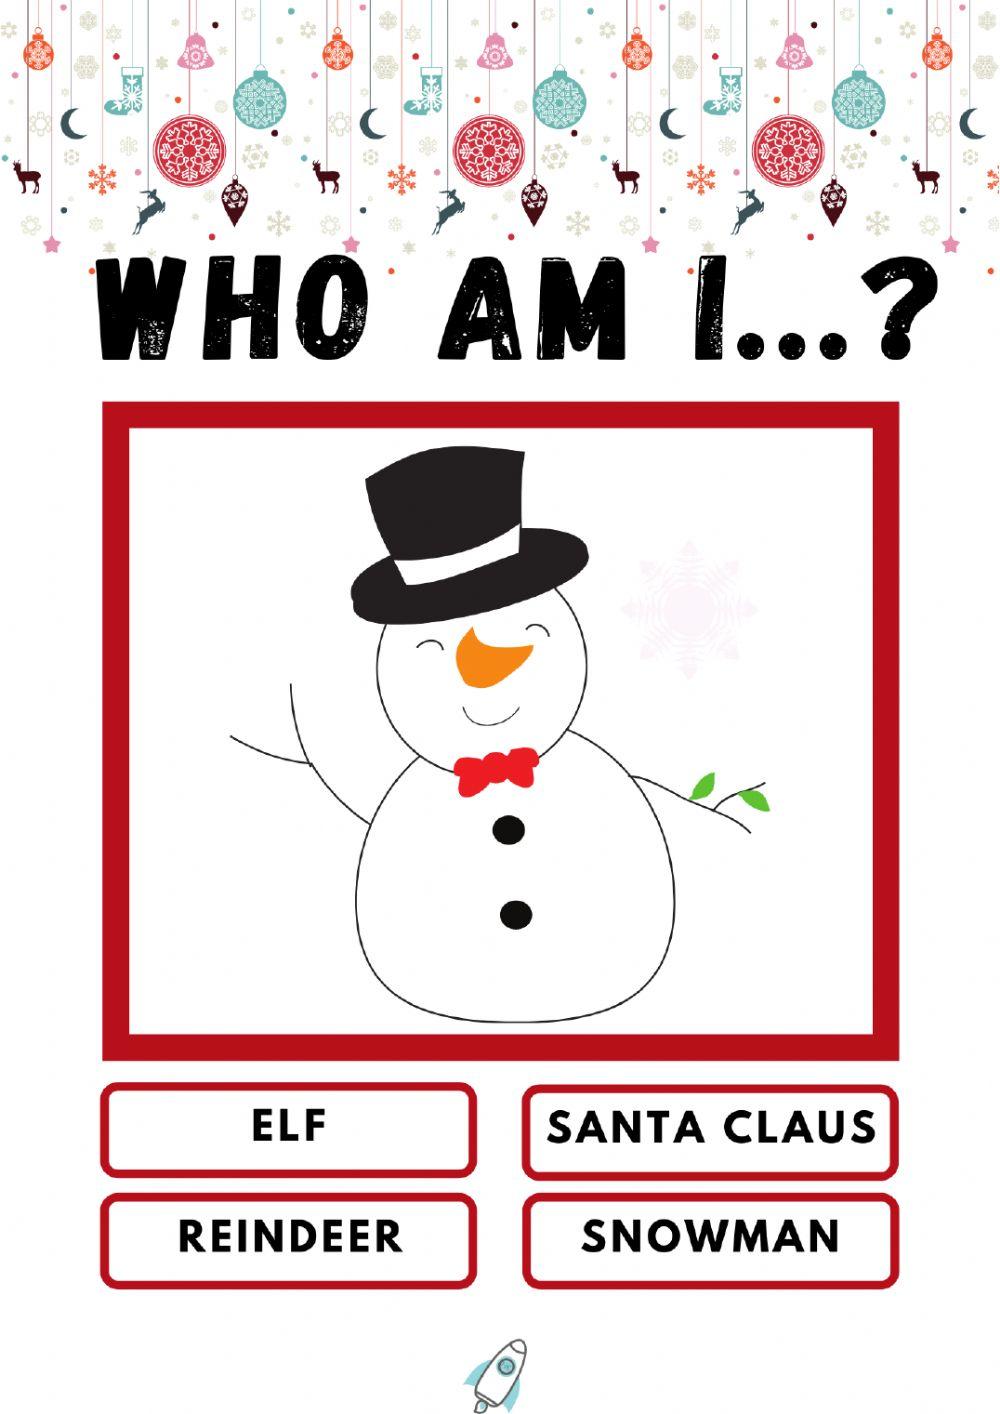 Who am I? Christmas